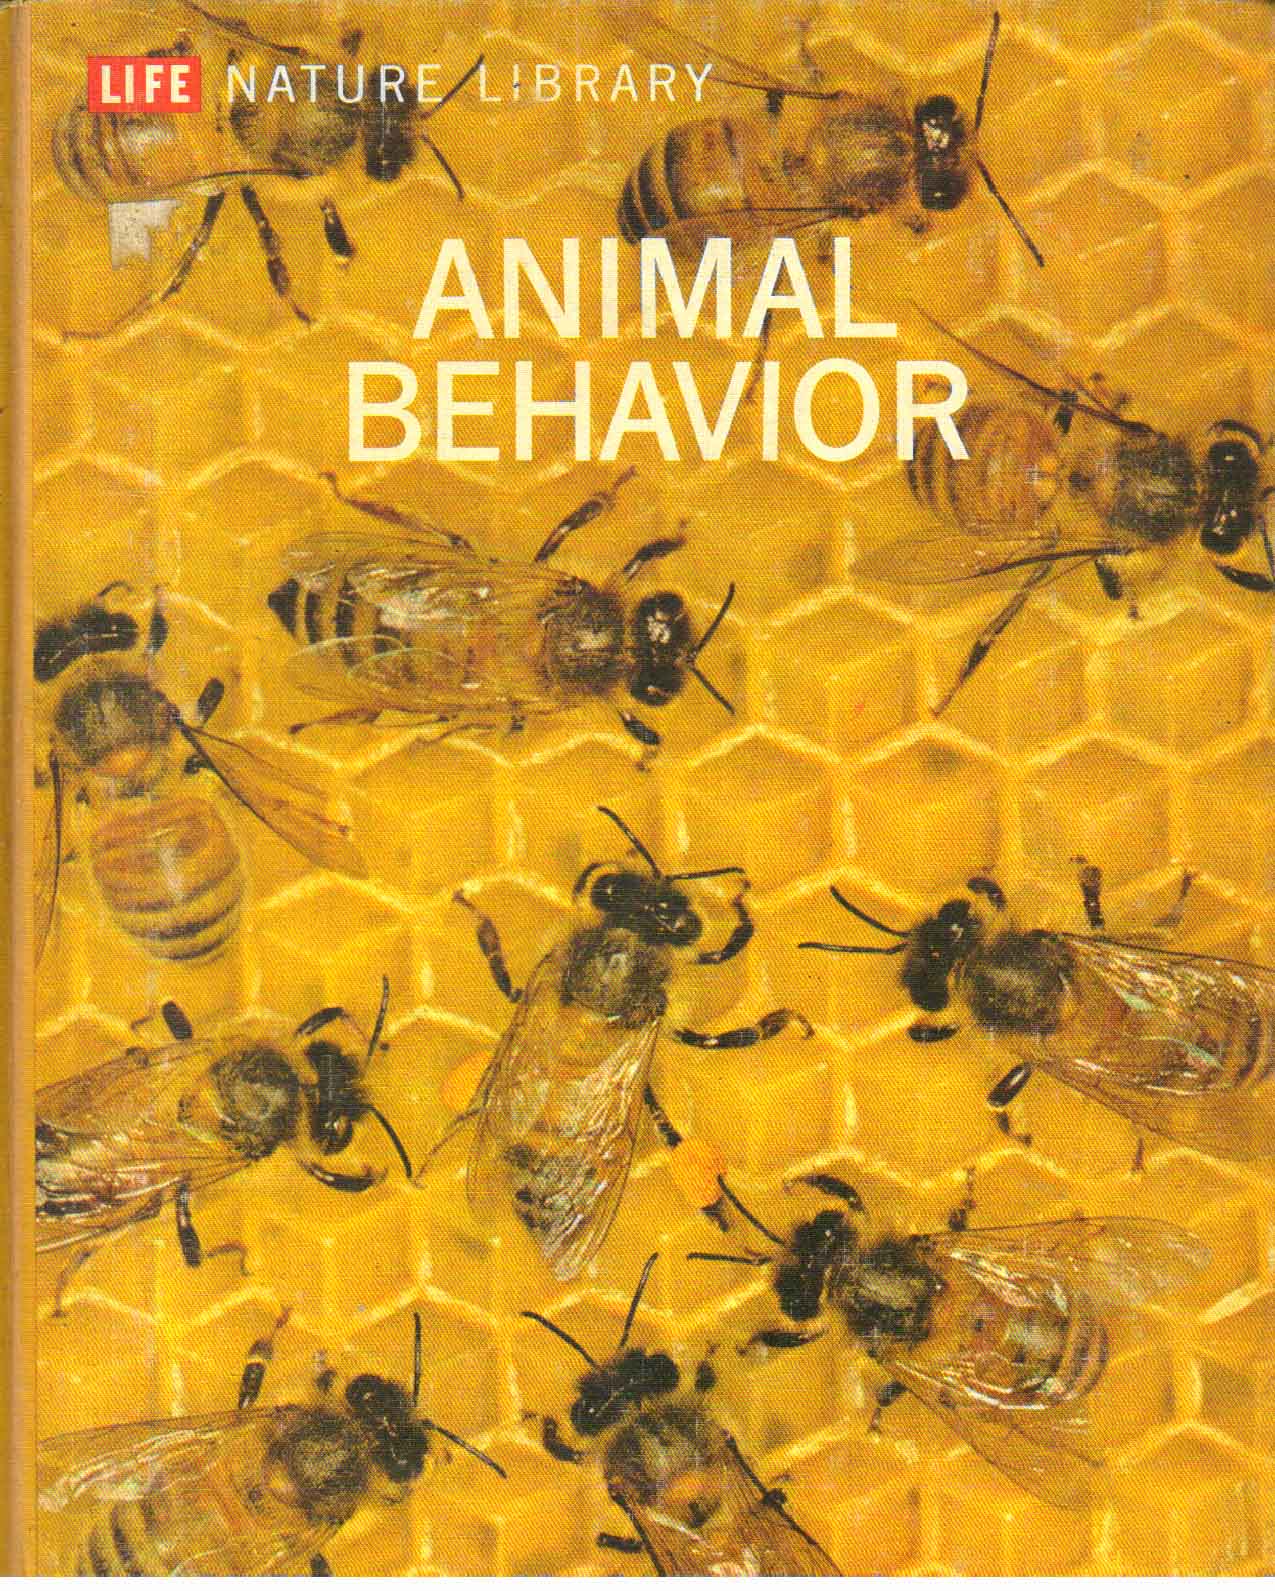  Life Nature Library  Animal Behavior. Time Life Books